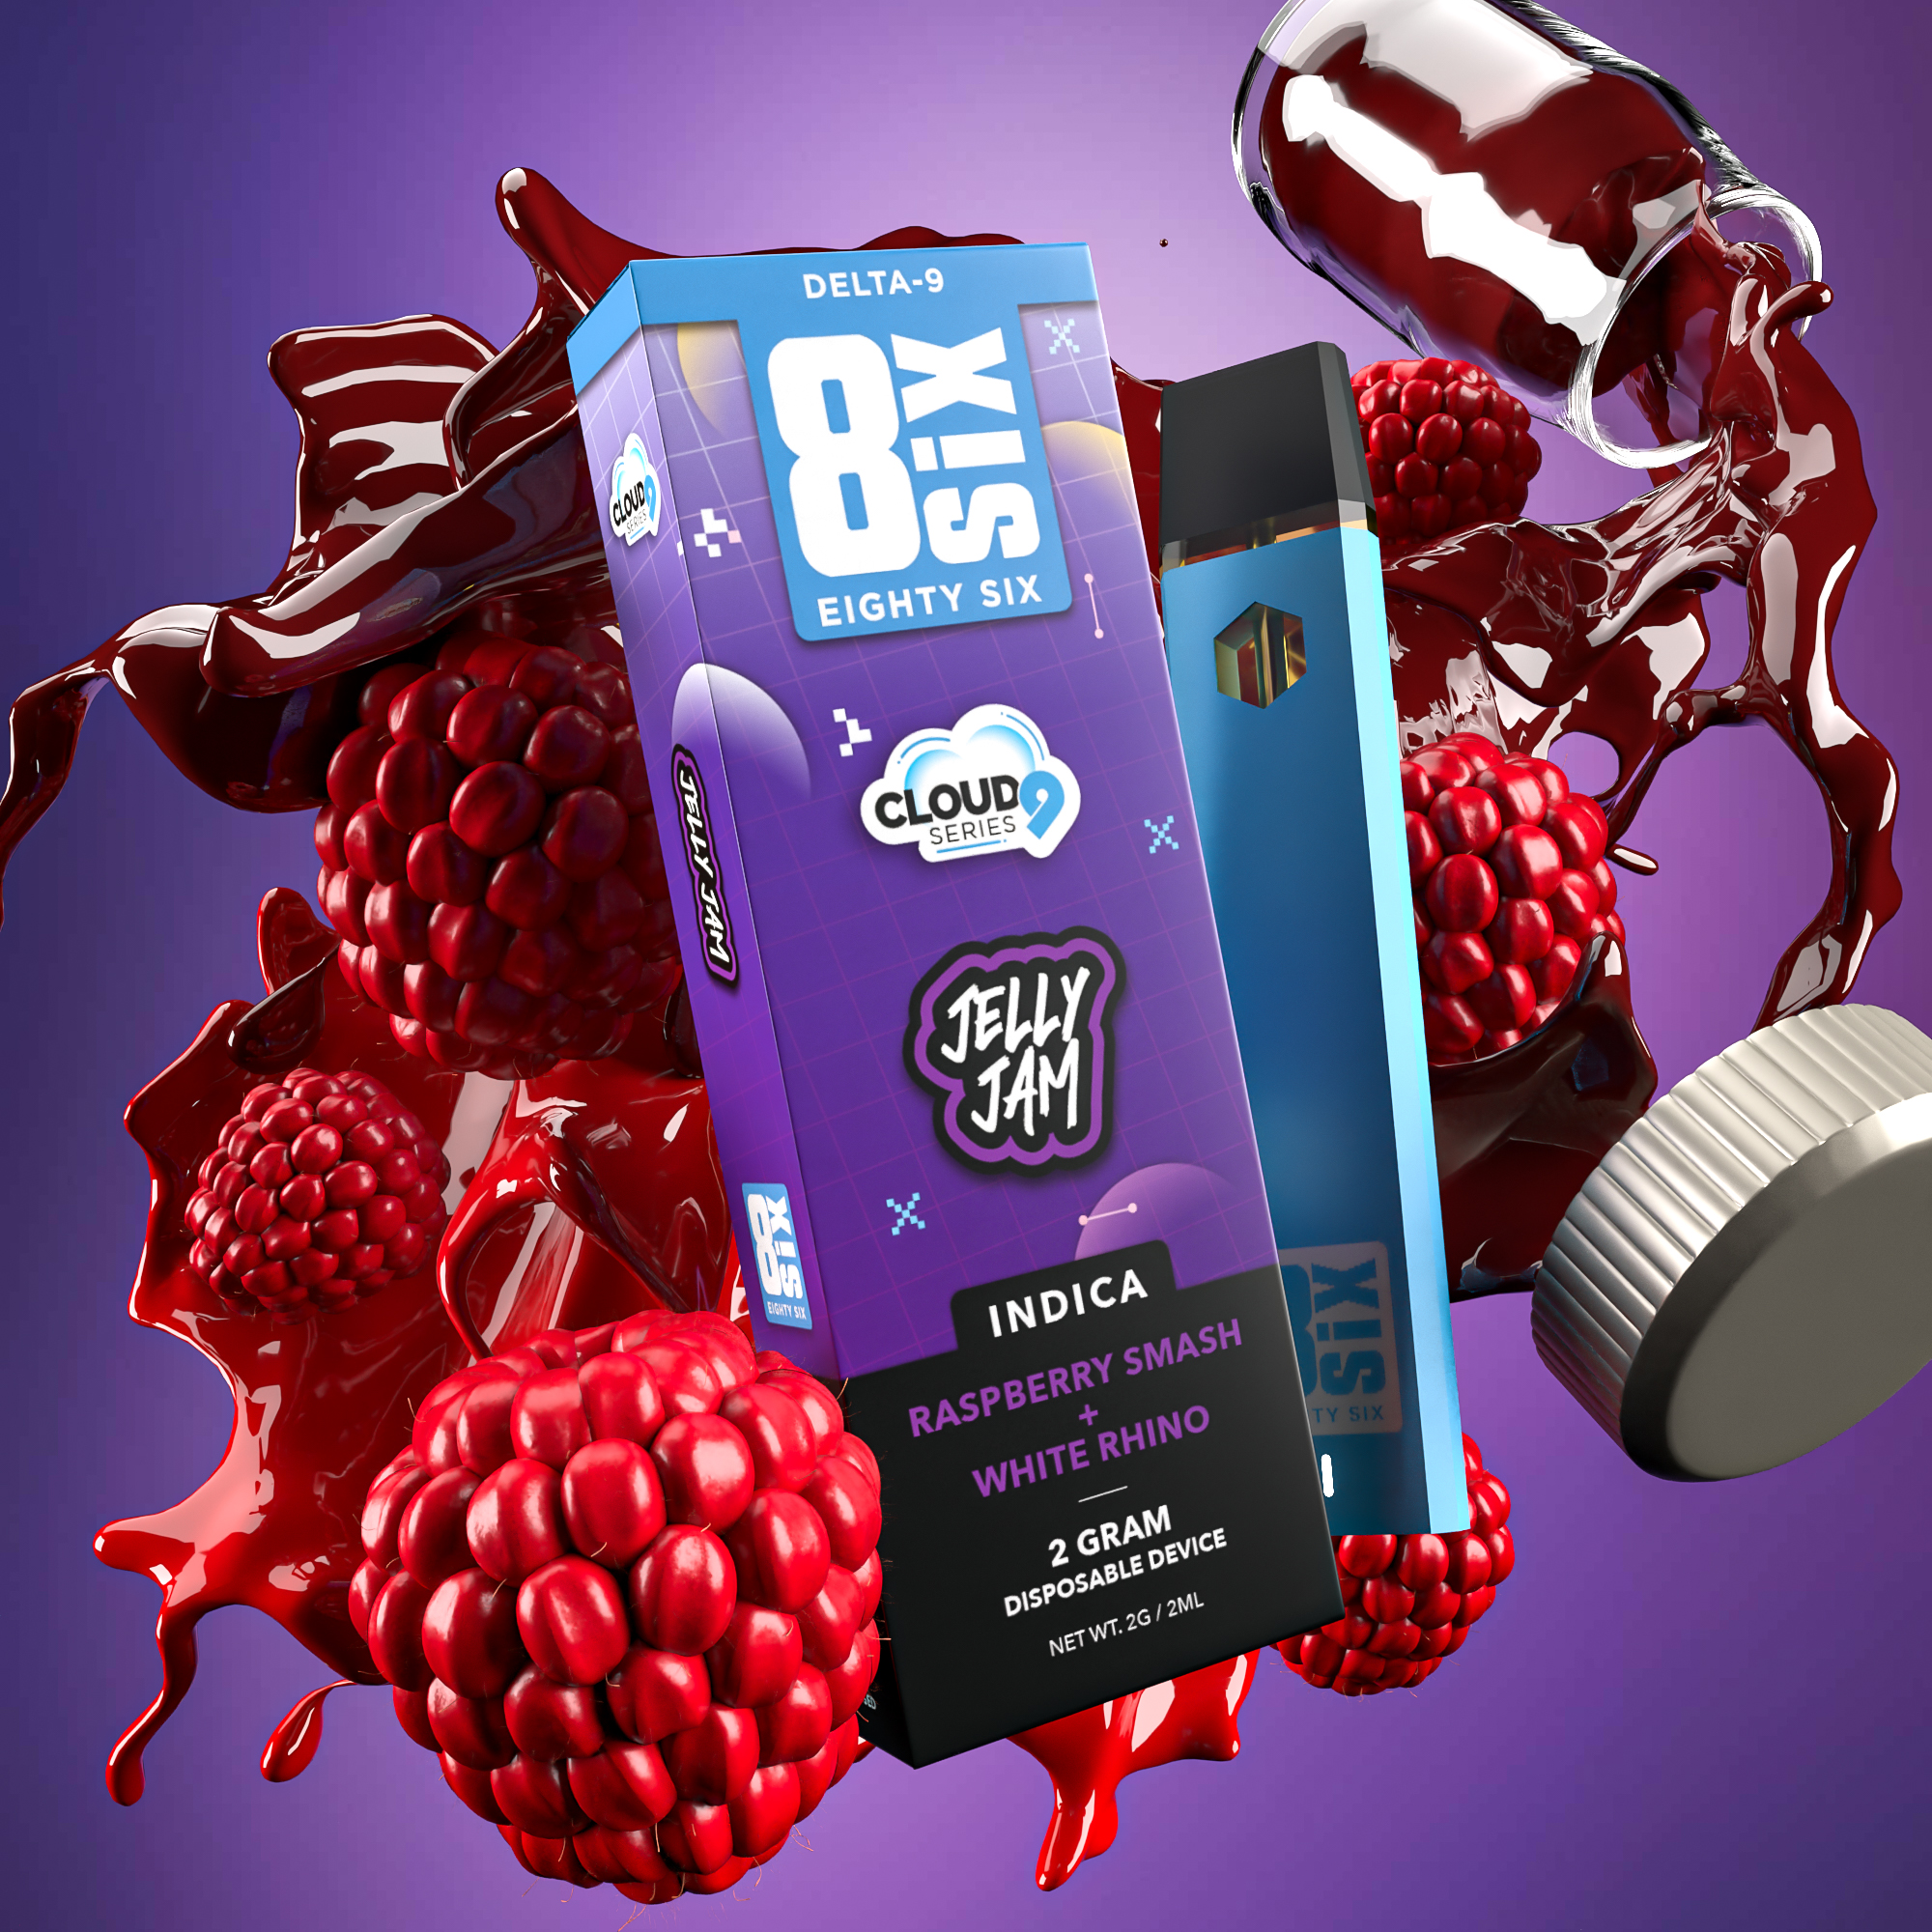 Eighty Six Jelly Jam Delta-9 THC 2G Disposable (Raspberry Smash) Best Price